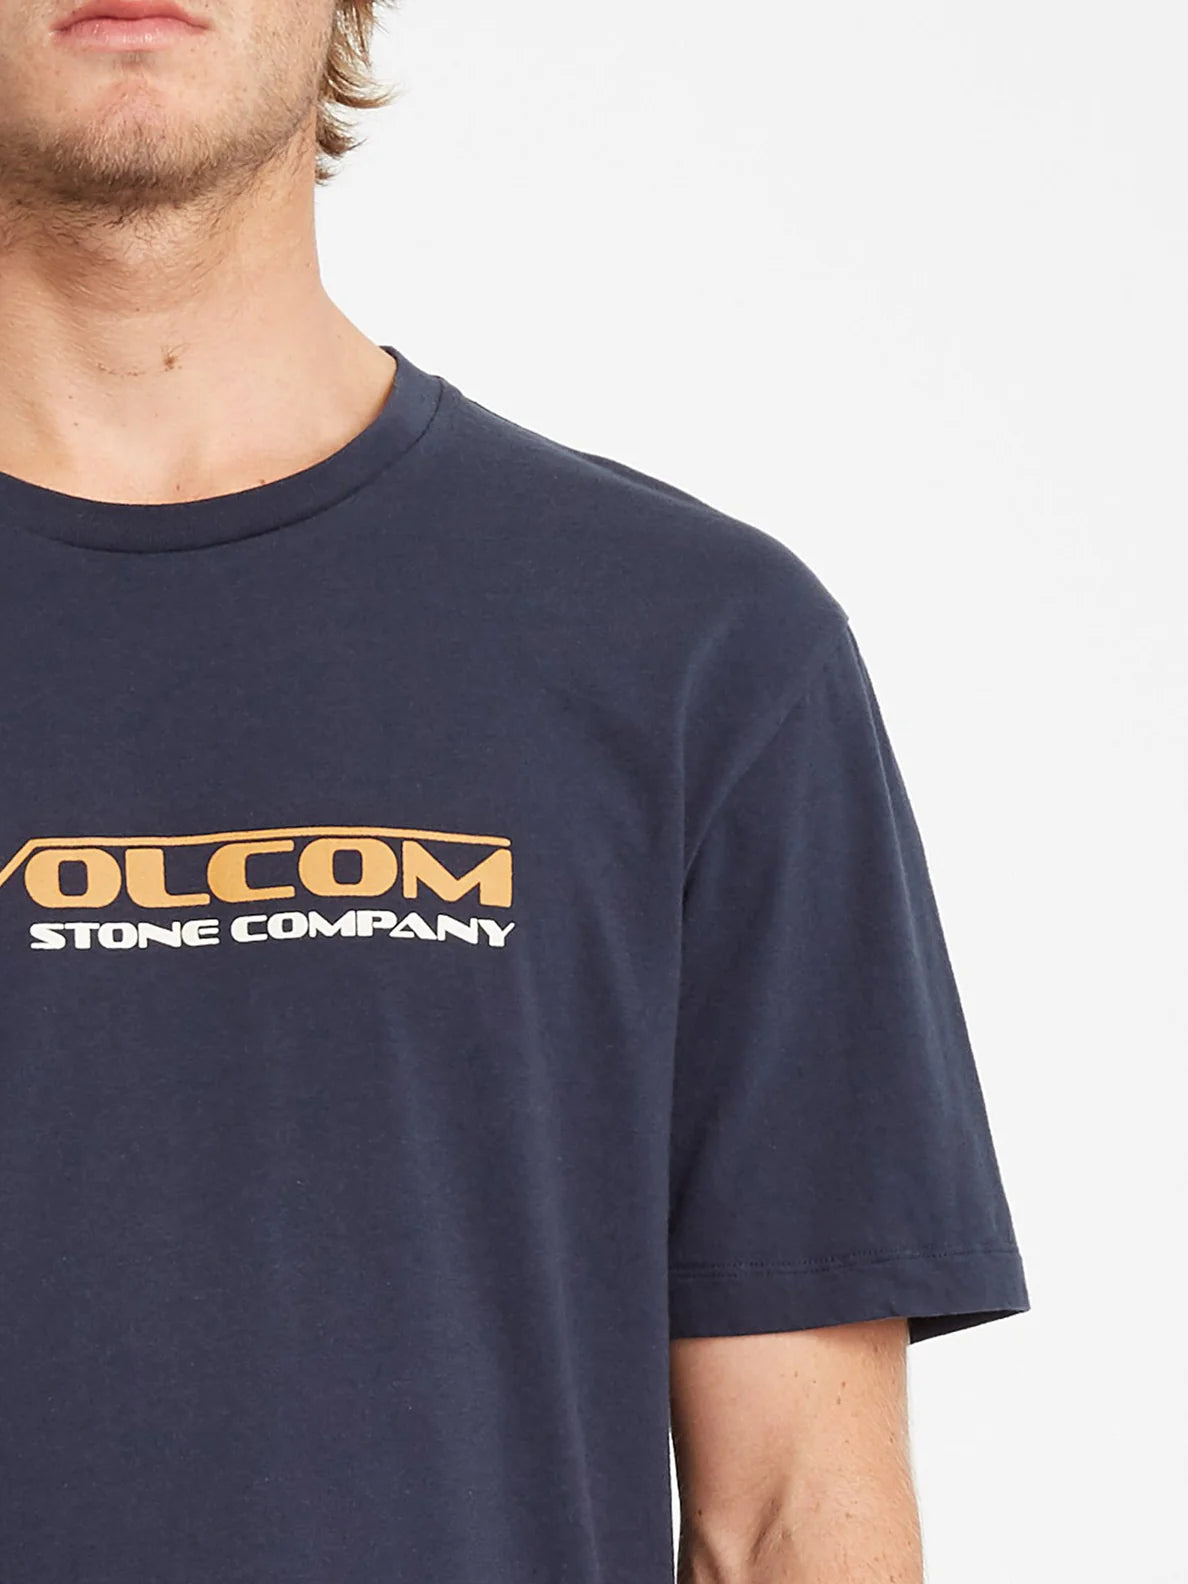 Camiseta Volcom Vee-Stone Navy | surfdevils.com